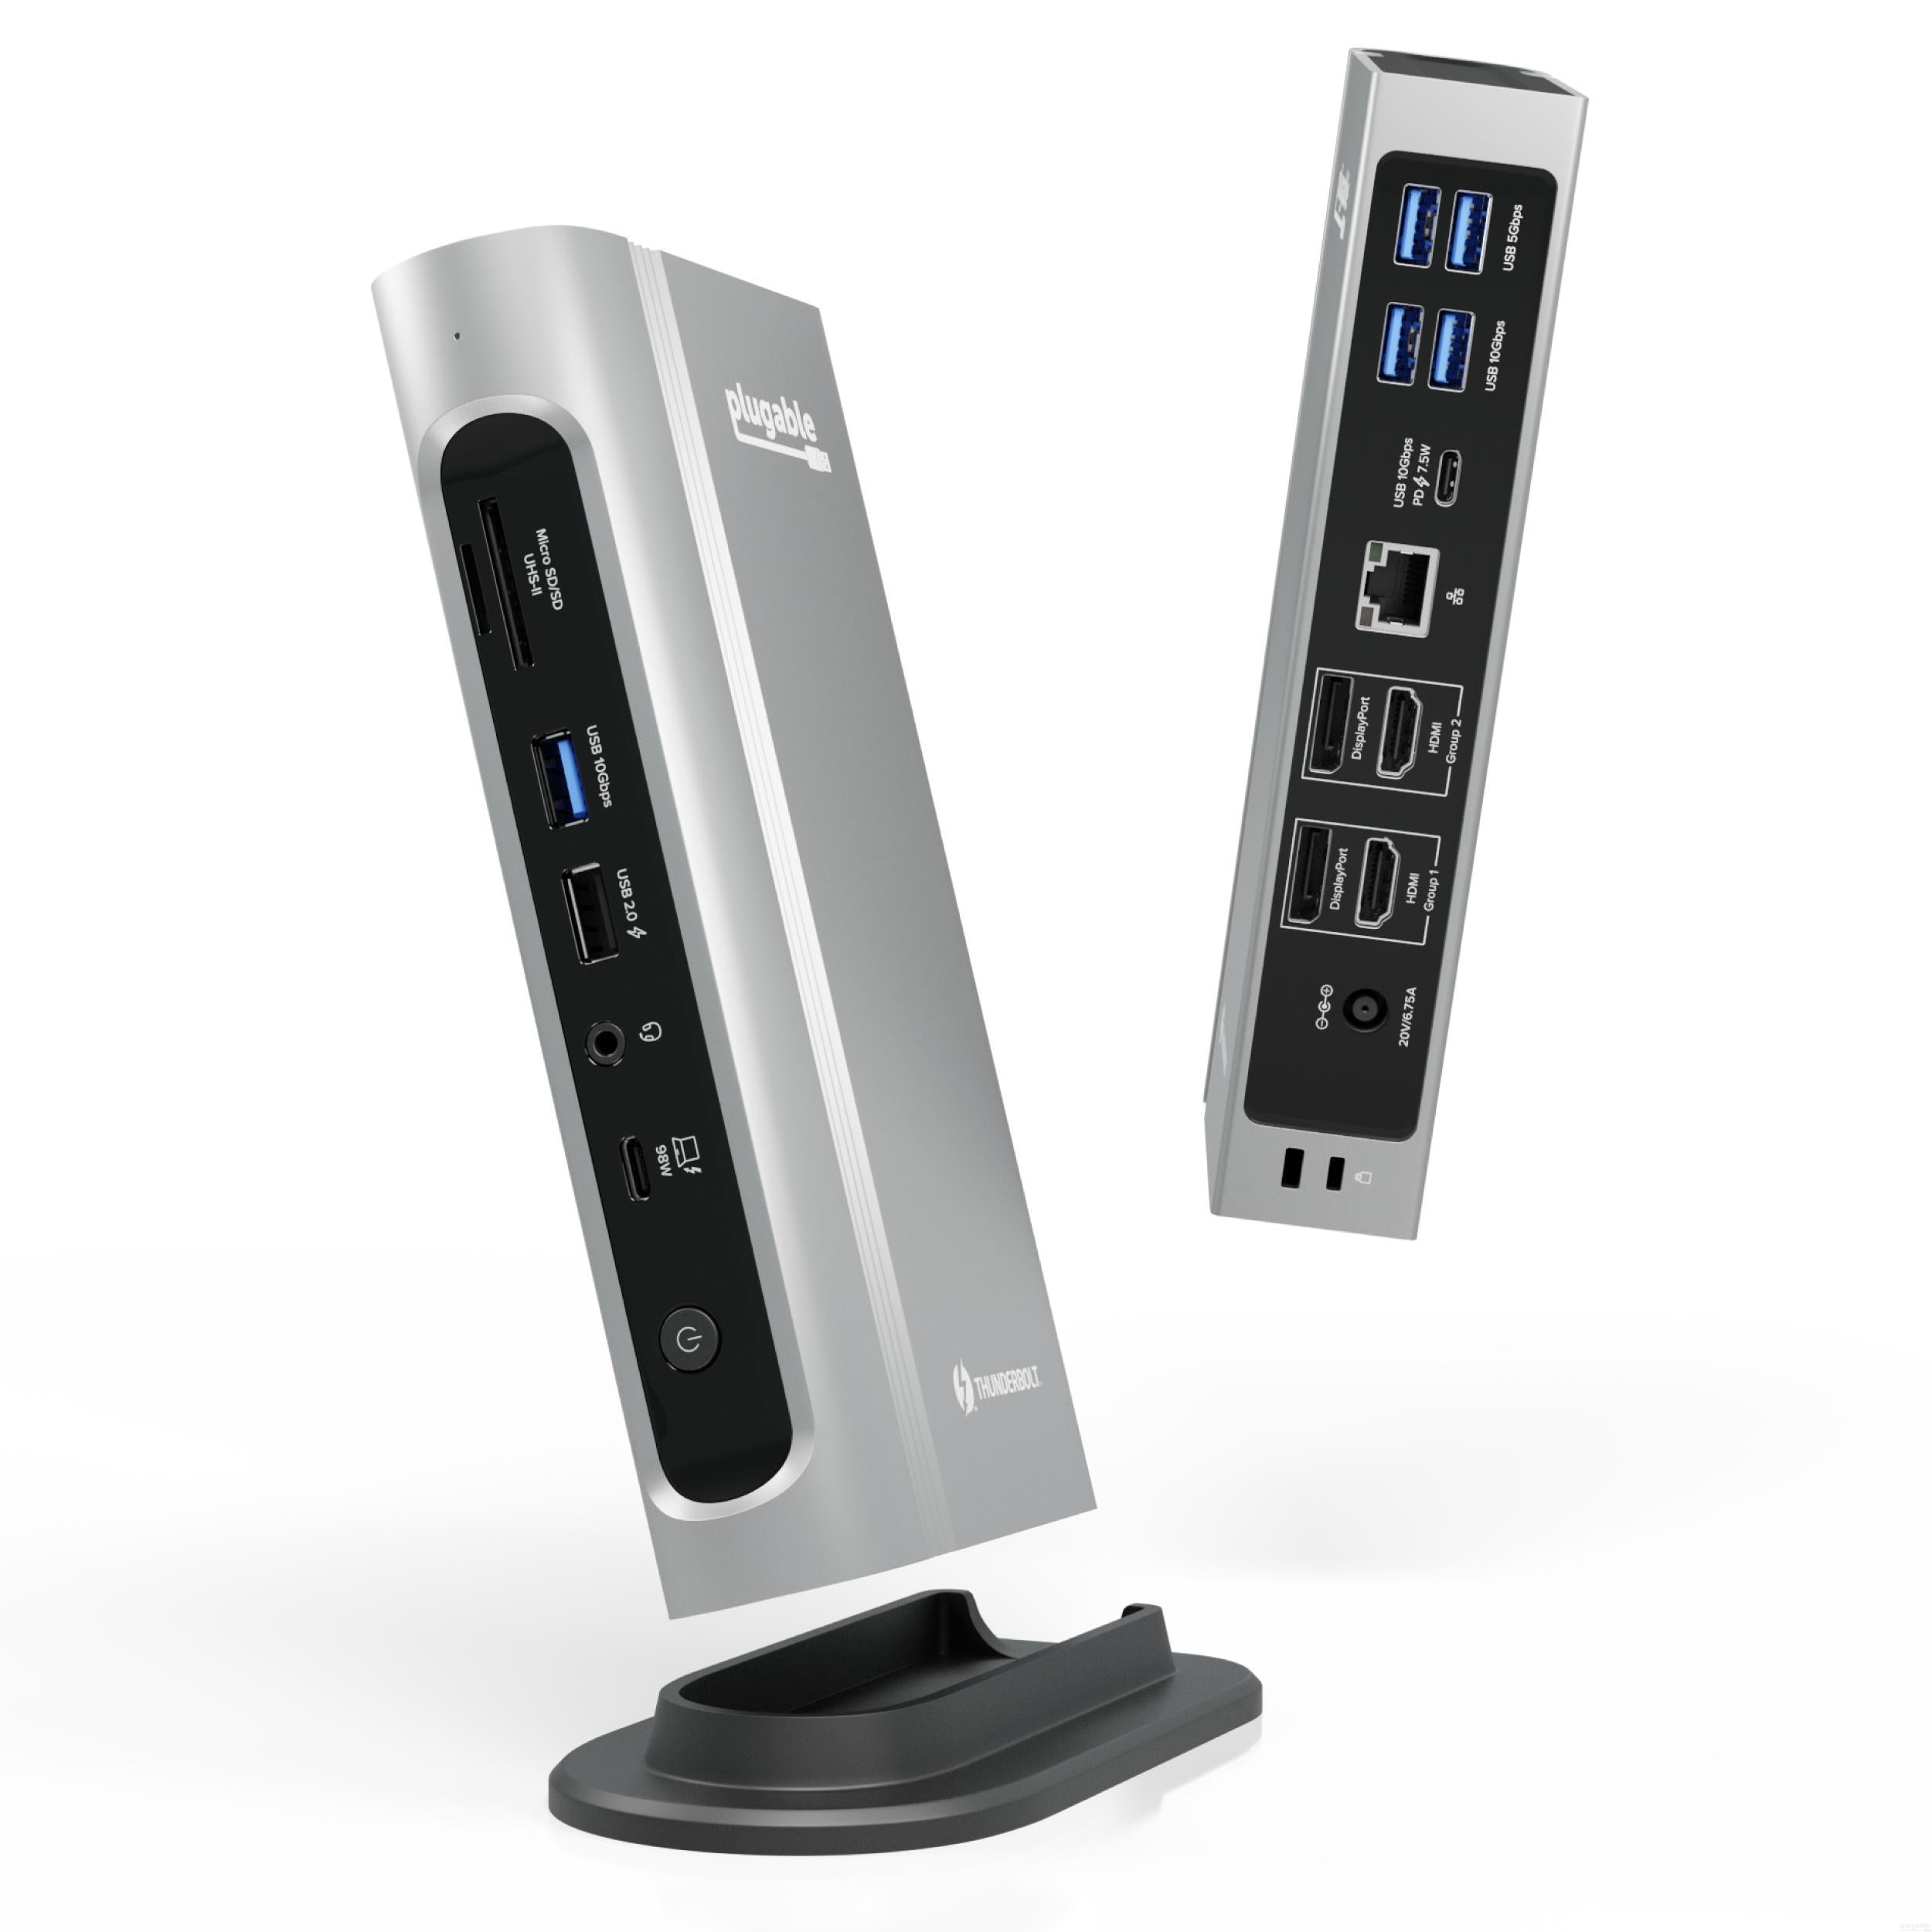 Thunderbolt 4 5-in-1 USB-C Docking Station | Belkin US | Belkin US